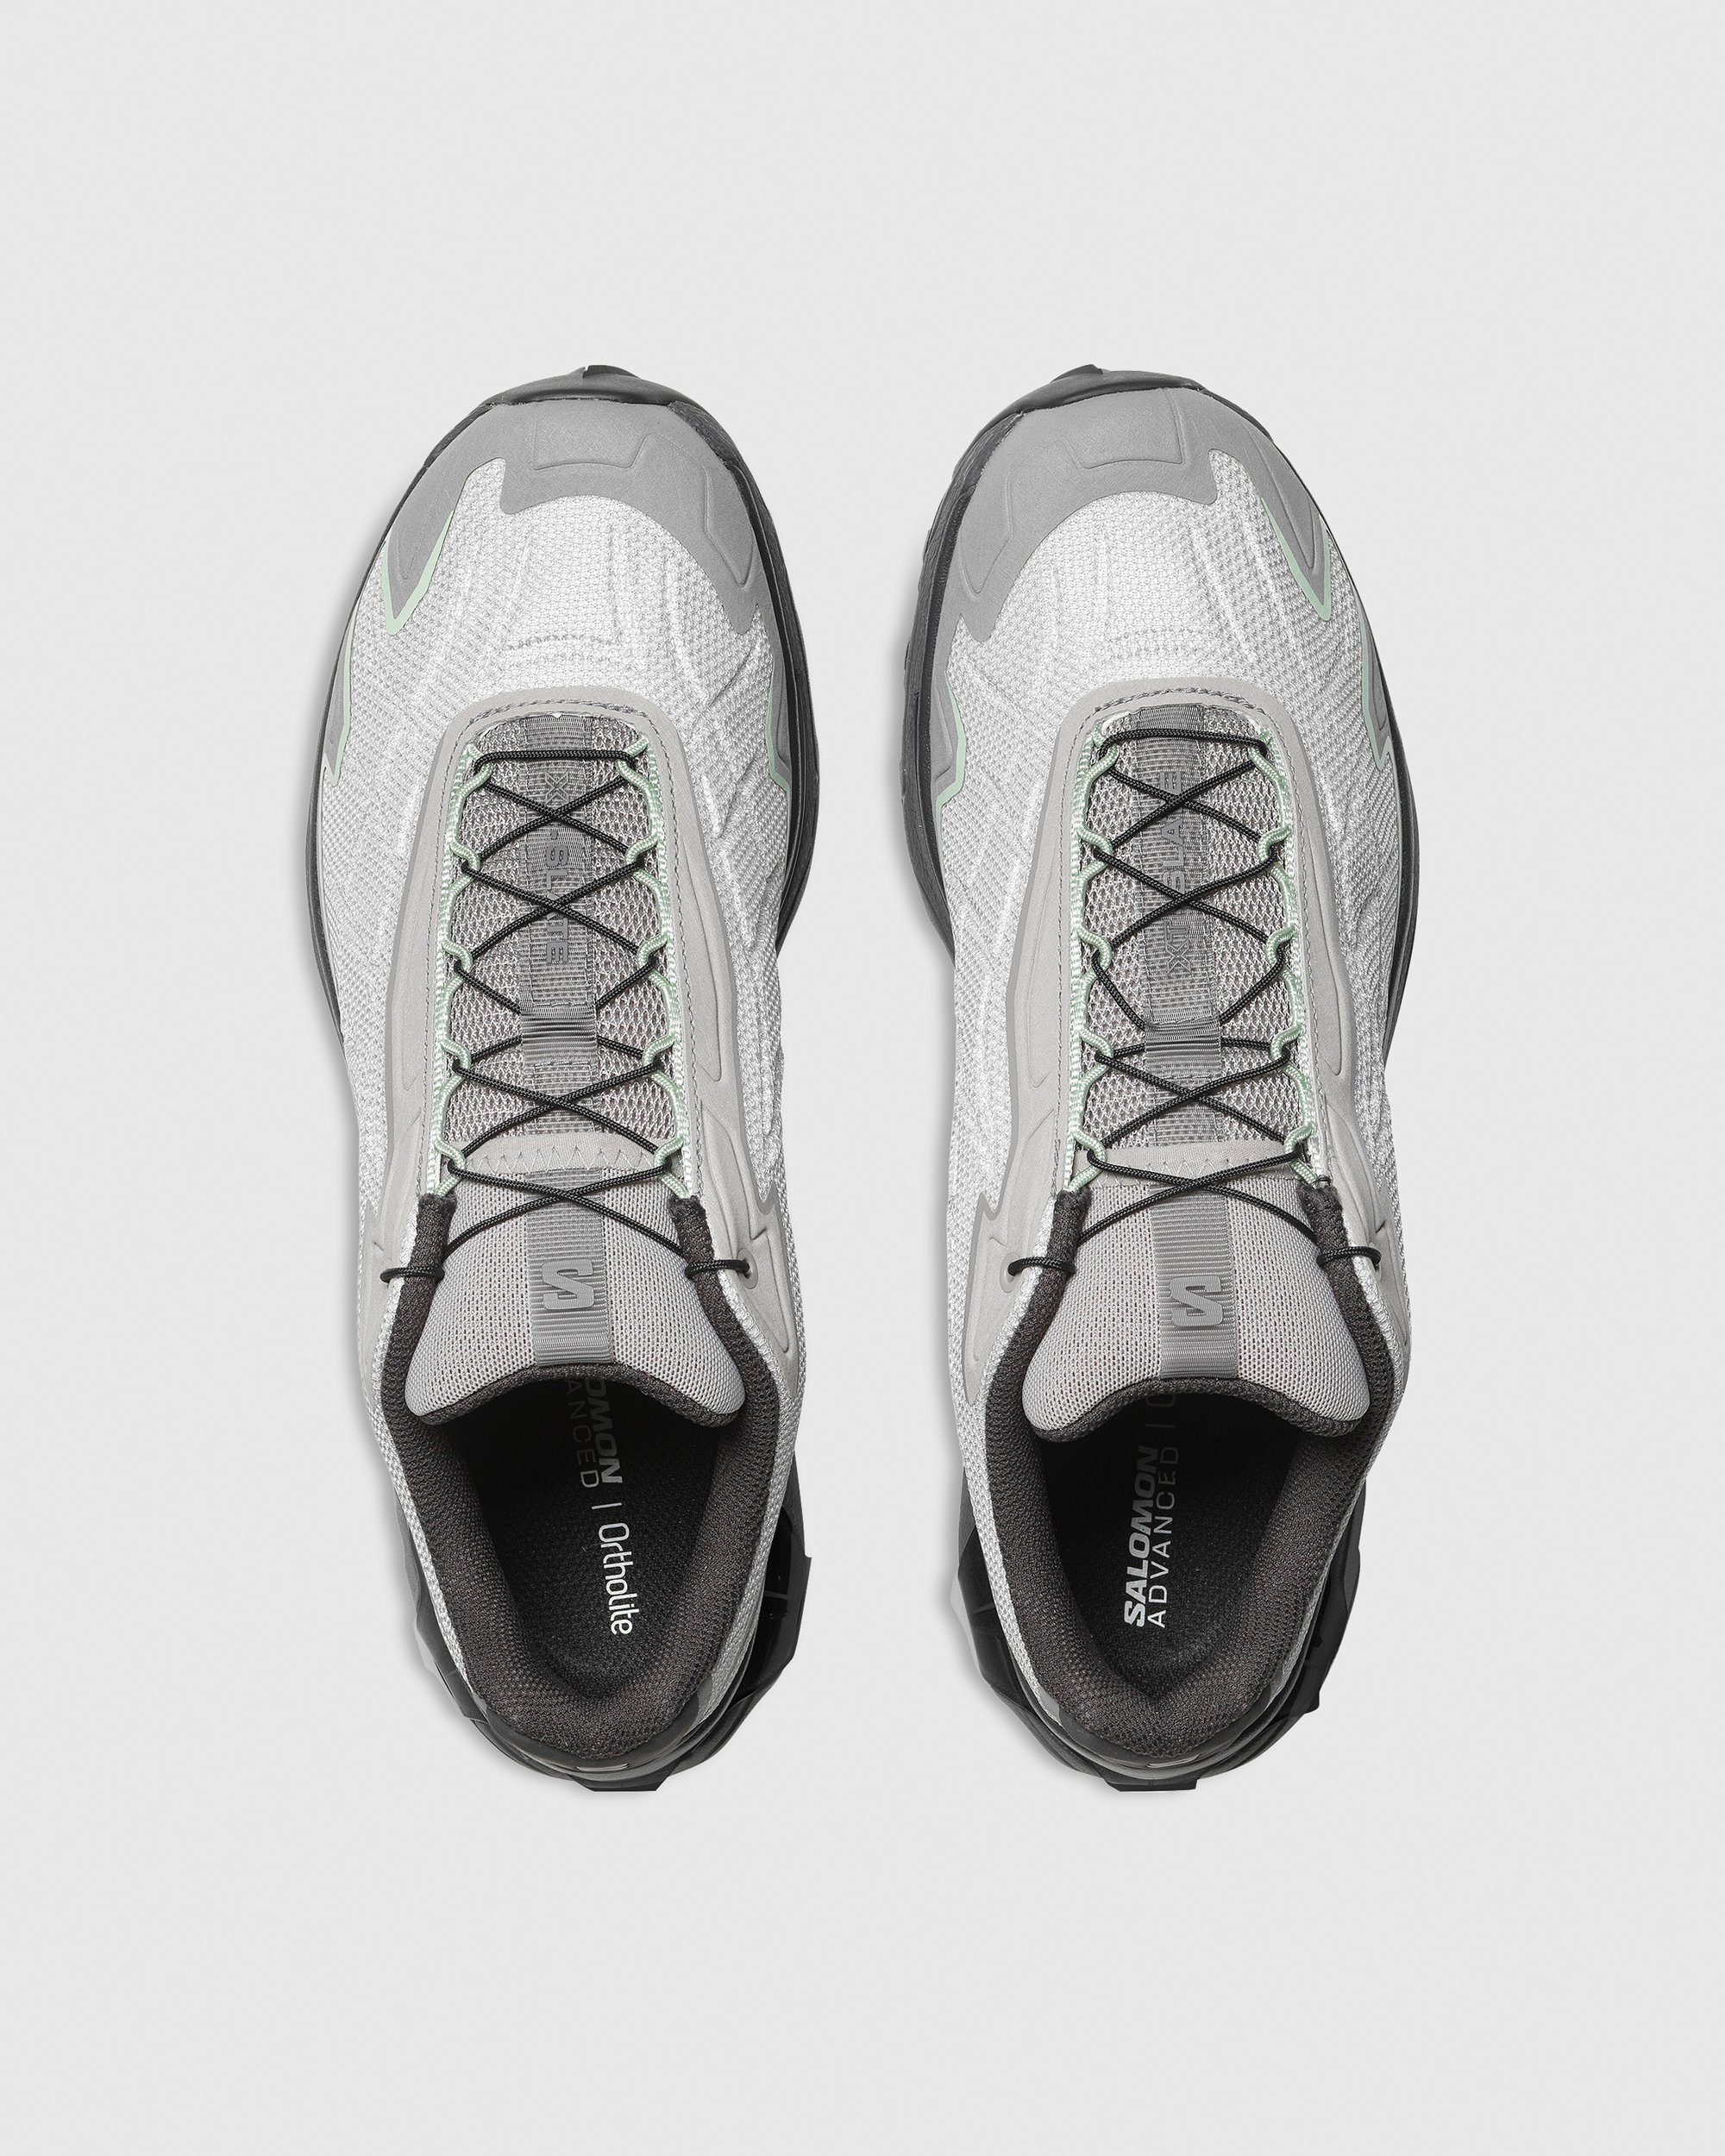 Salomon - XT-Slate Advanced Metal/Gray Flannel/Cameo Green - Footwear - Grey - Image 3